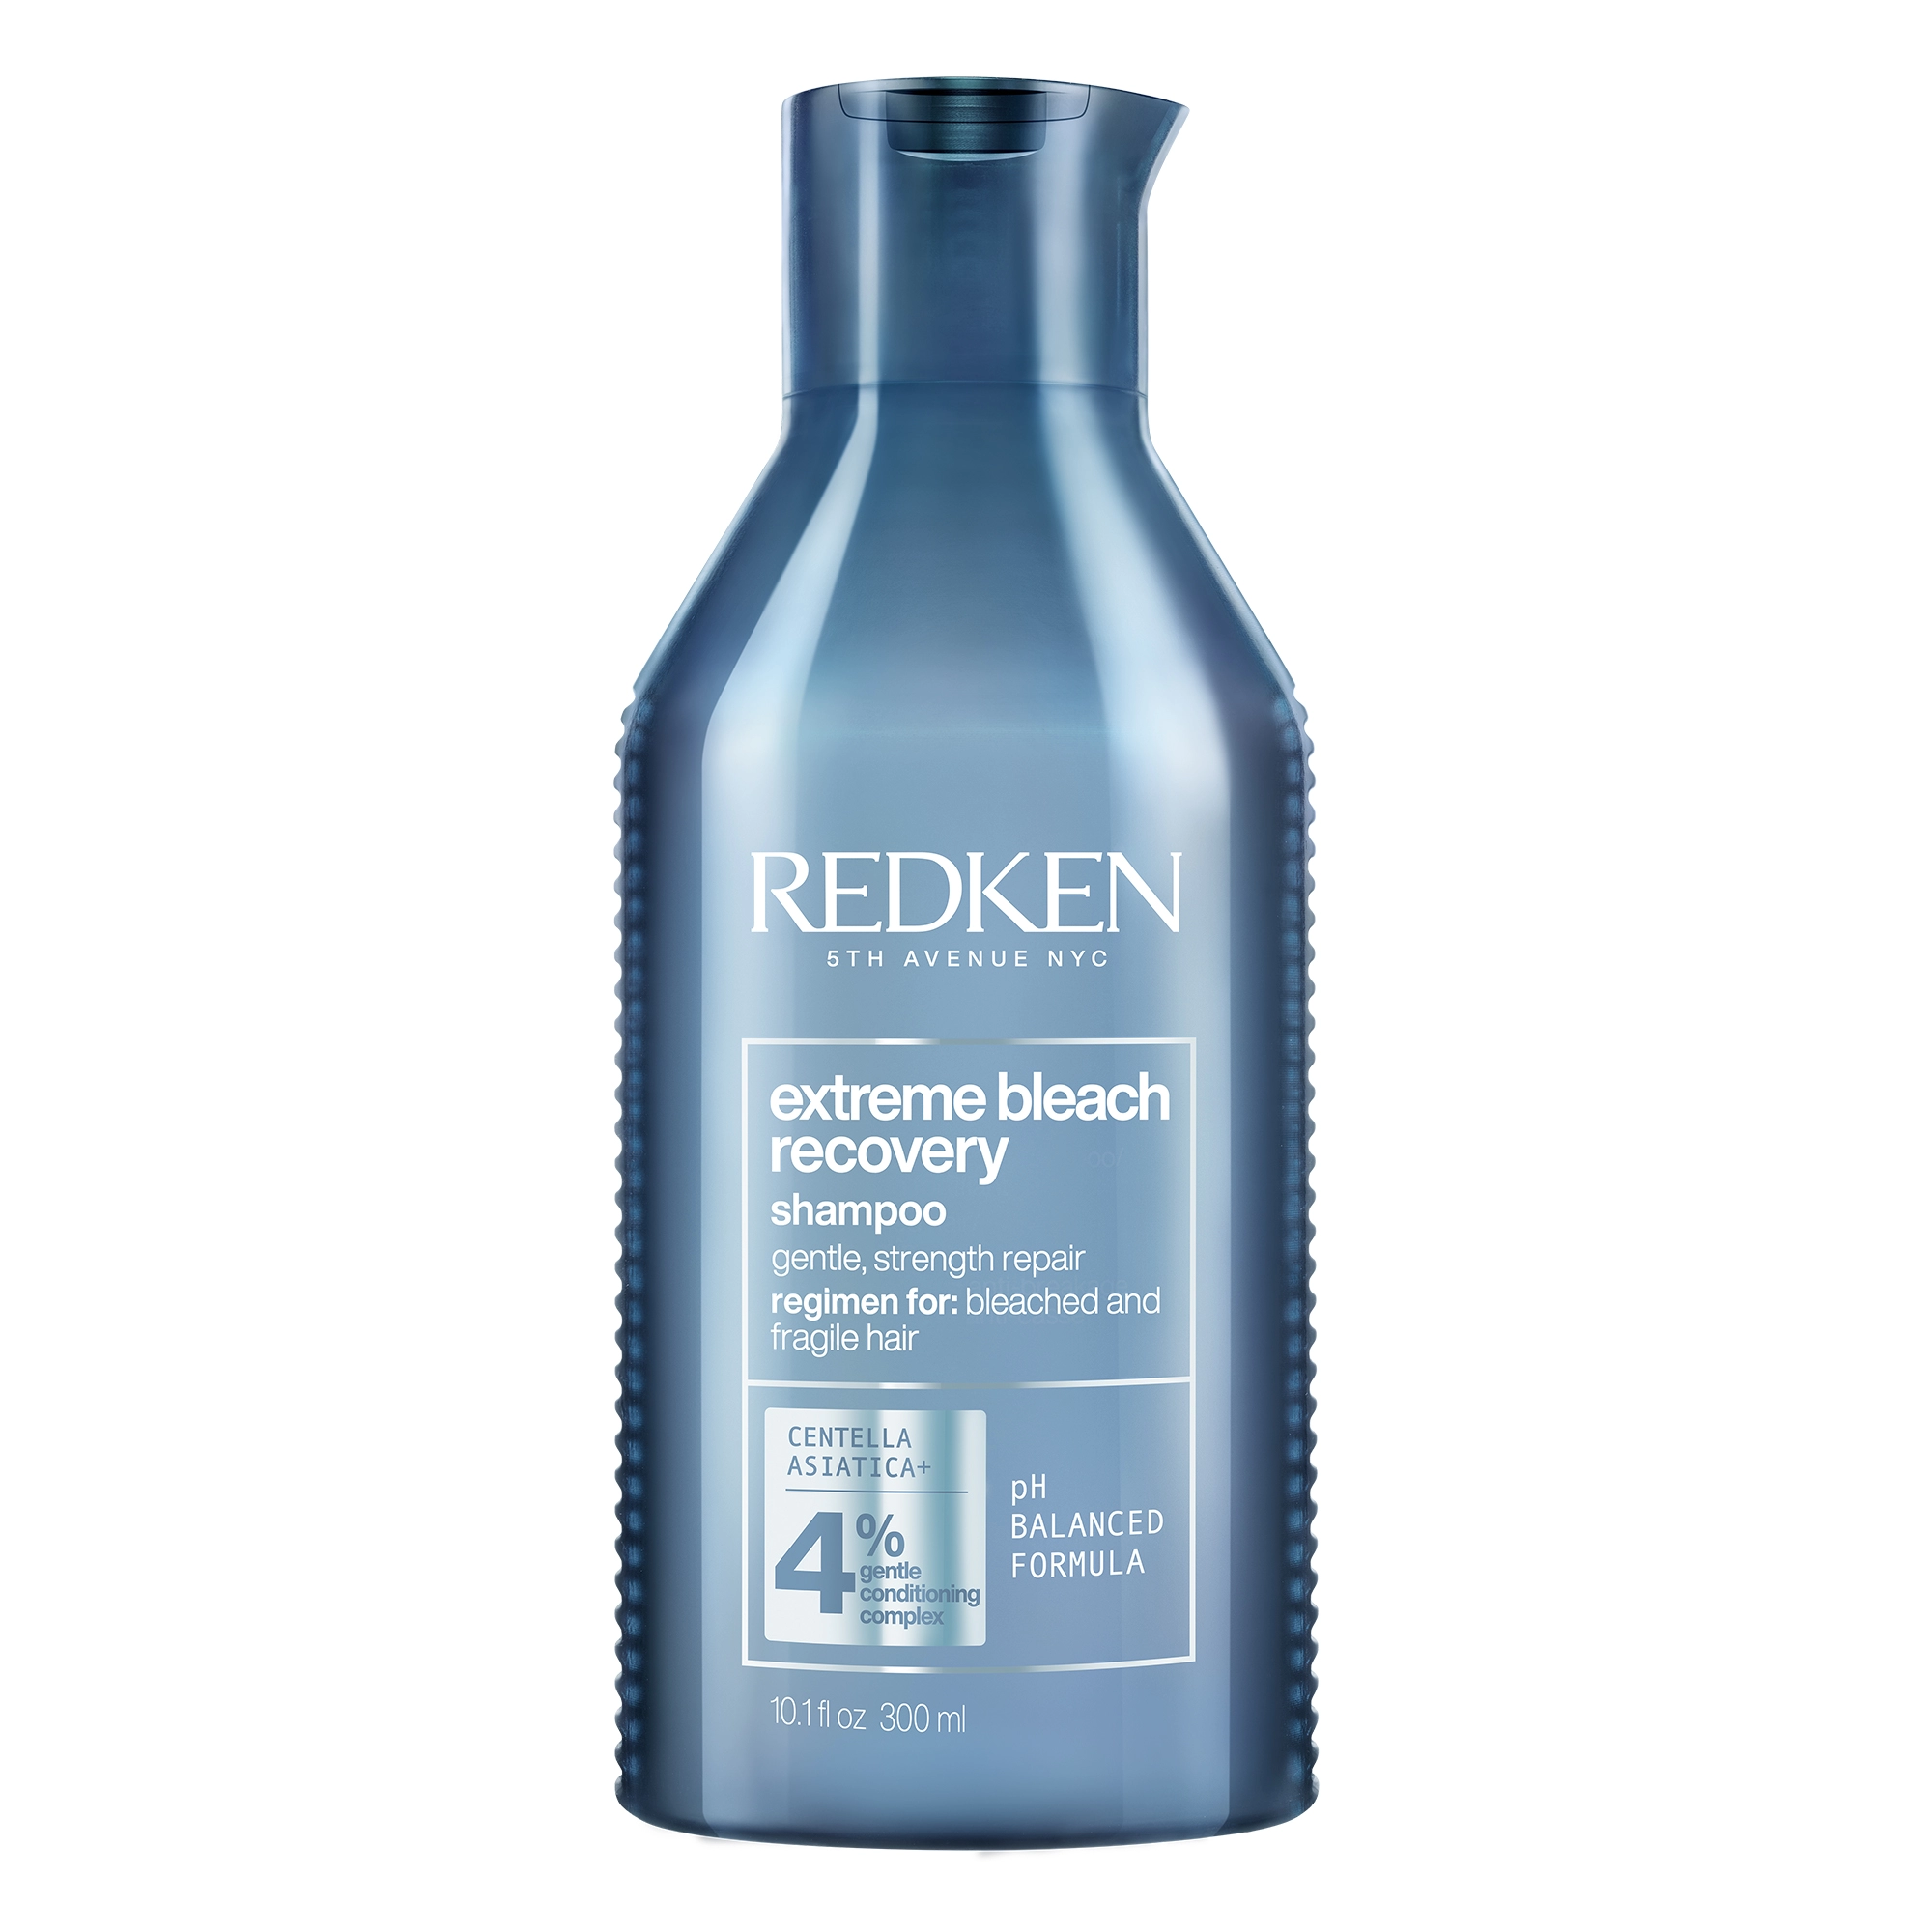 Redken 2020 Extreme Bleach Recovery Shampoo Product Shot 2000x2000 1 jpg